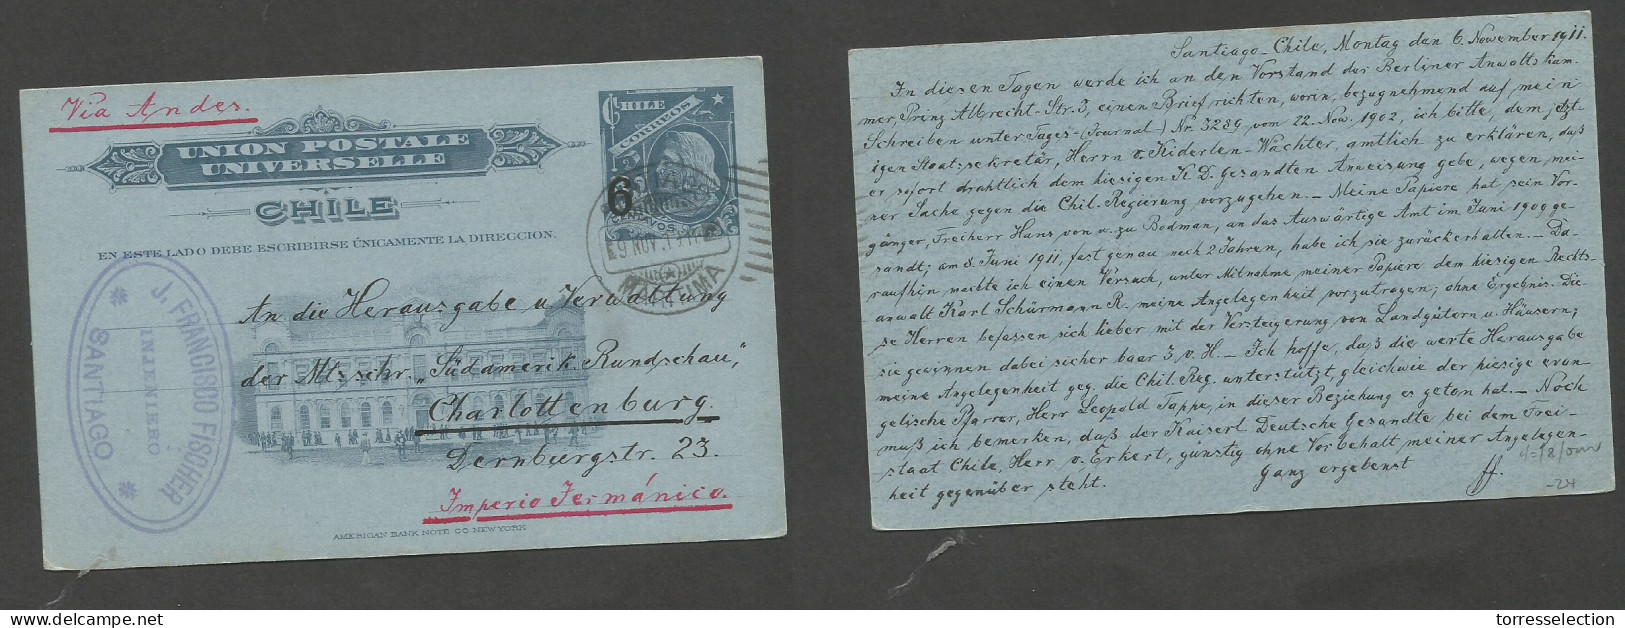 CHILE - Stationery. 1911 (6 Nov) Stgo - Germany, Charlottenburg. 6c Ovptd Stat Card. VF Used. Maritime Cancel. XSALE. - Chile